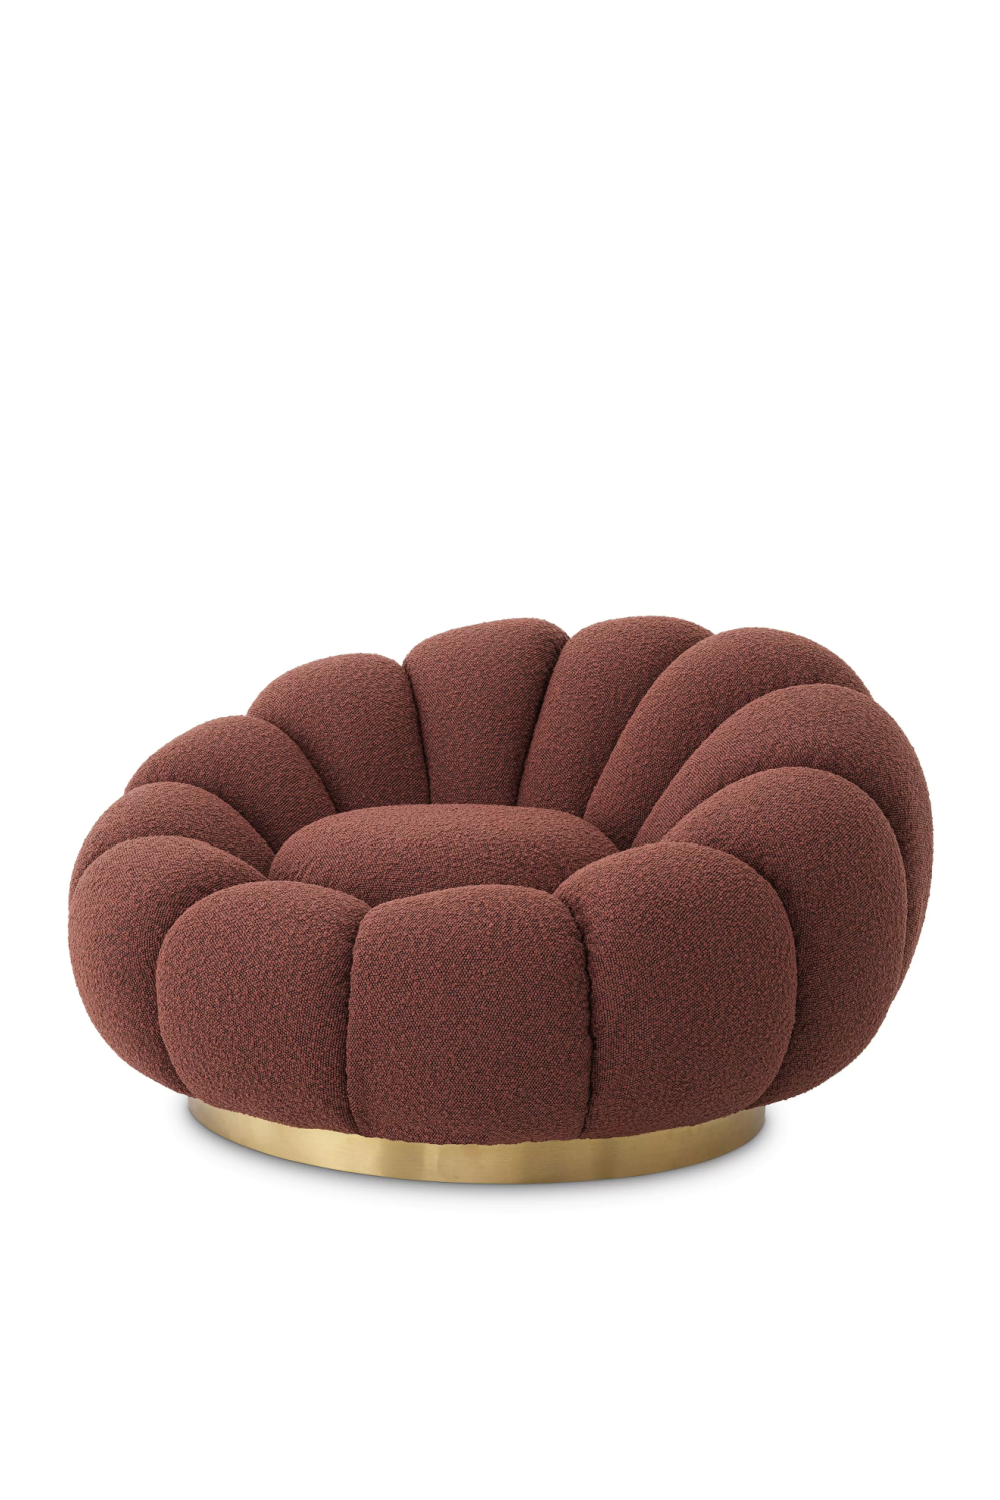 Flower Design Swivel Chair | Eichholtz Mello | Oroa.com